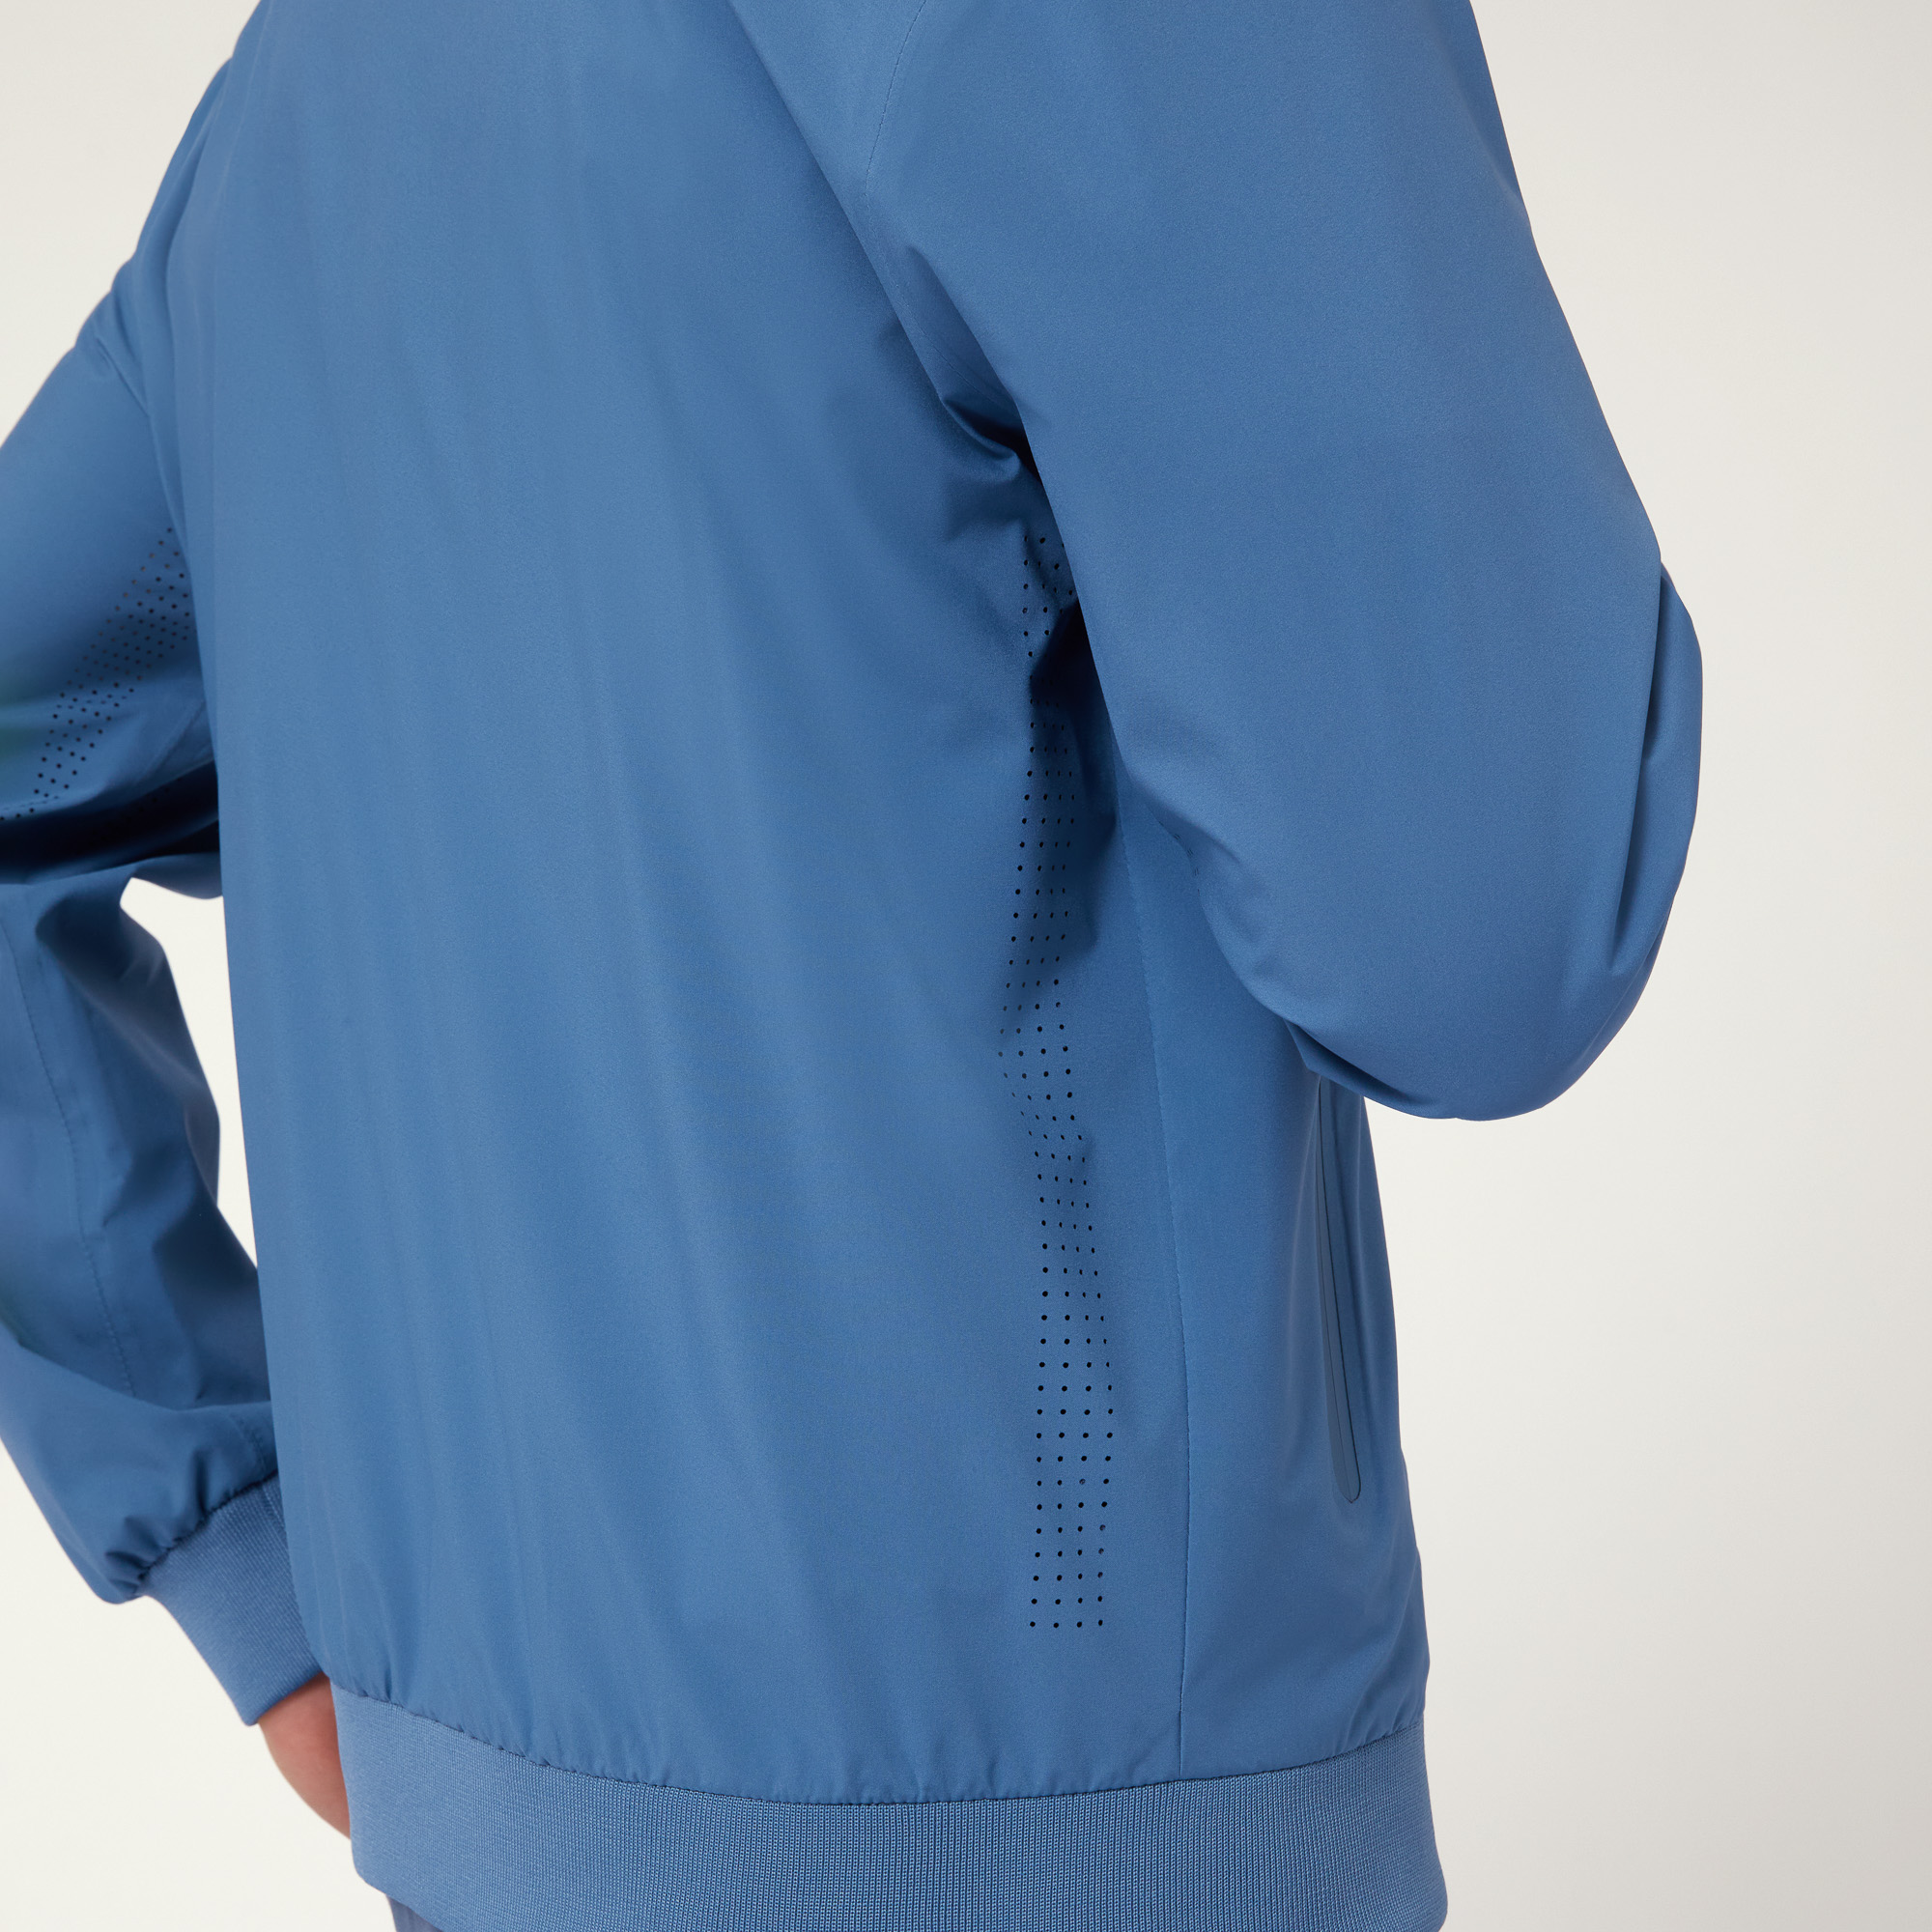 Jacke aus Softshell, Blau, large image number 2